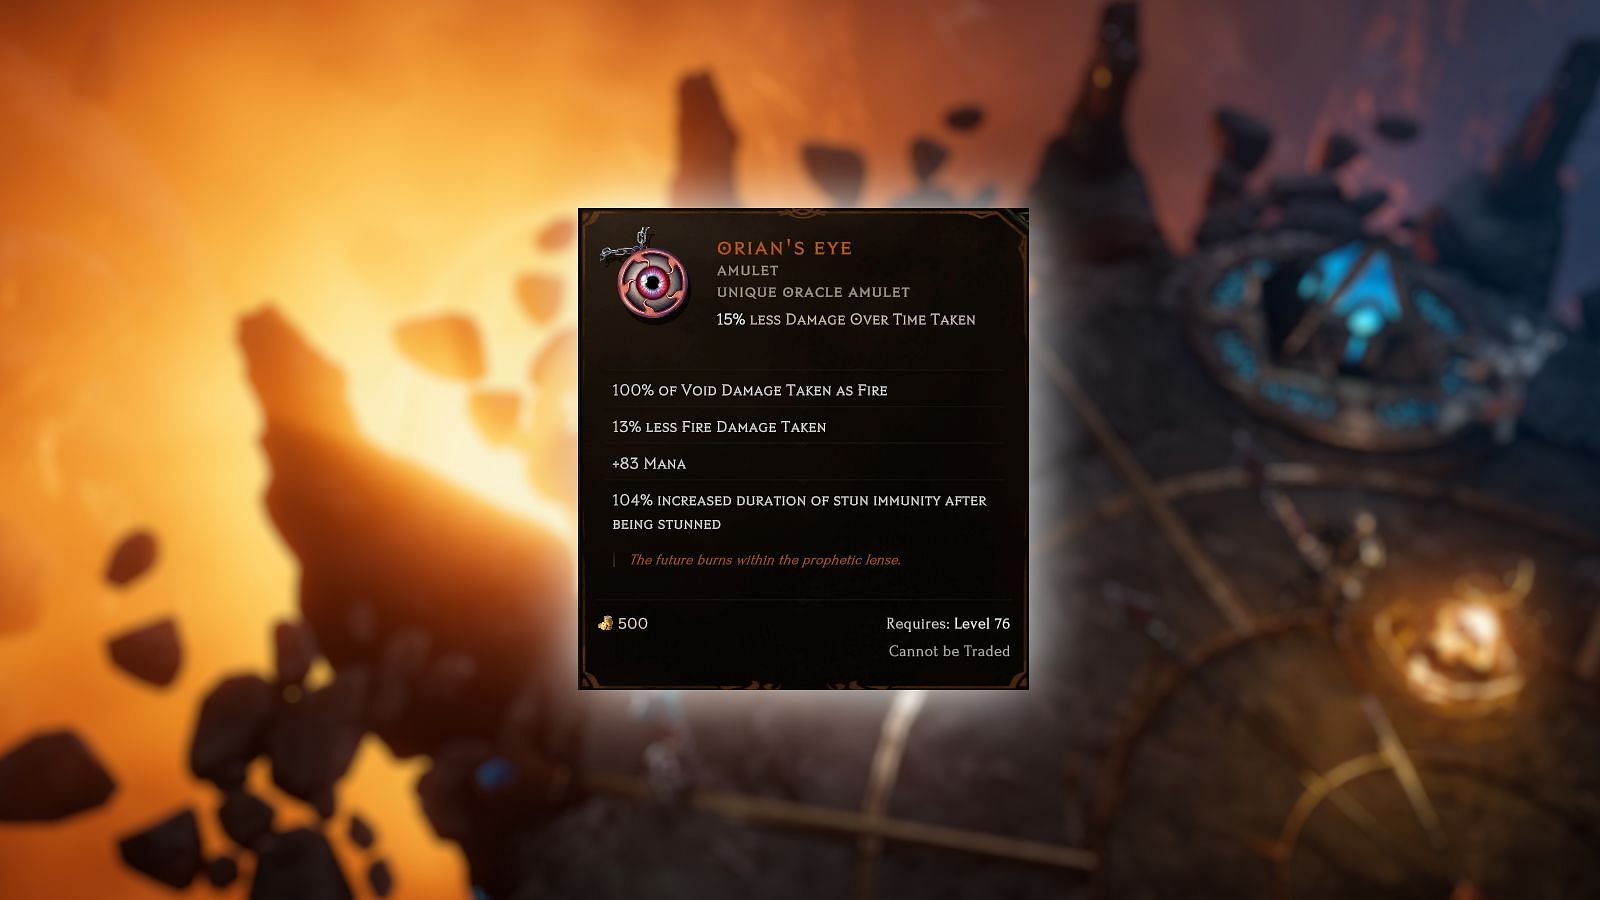 Orian&#039;s Eye is a Unique Amulet (Image via Eleventh Hour Games)